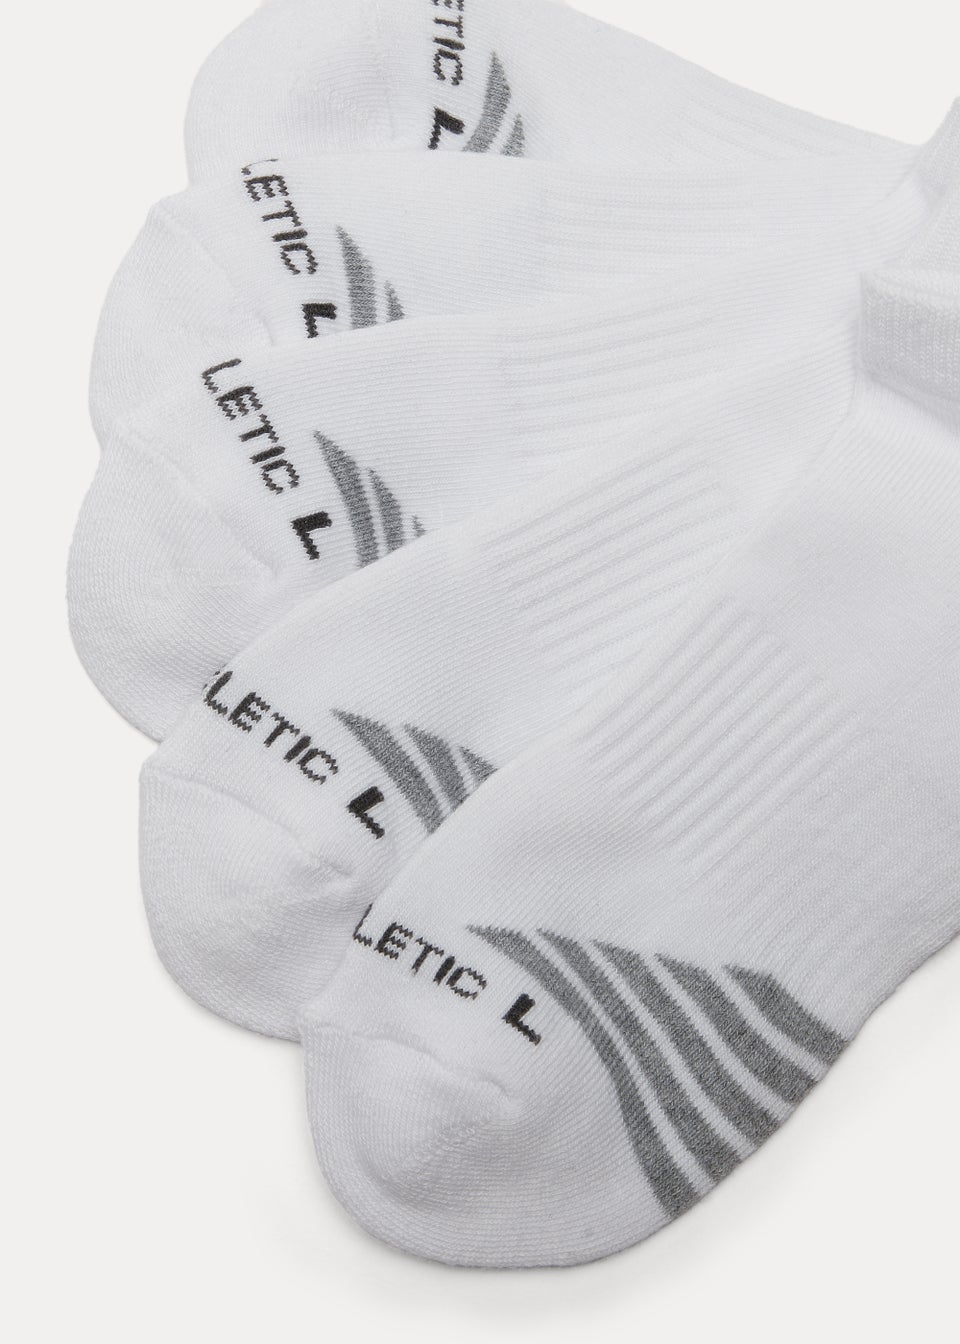 US Athletic 5 Pack White Sports Socks